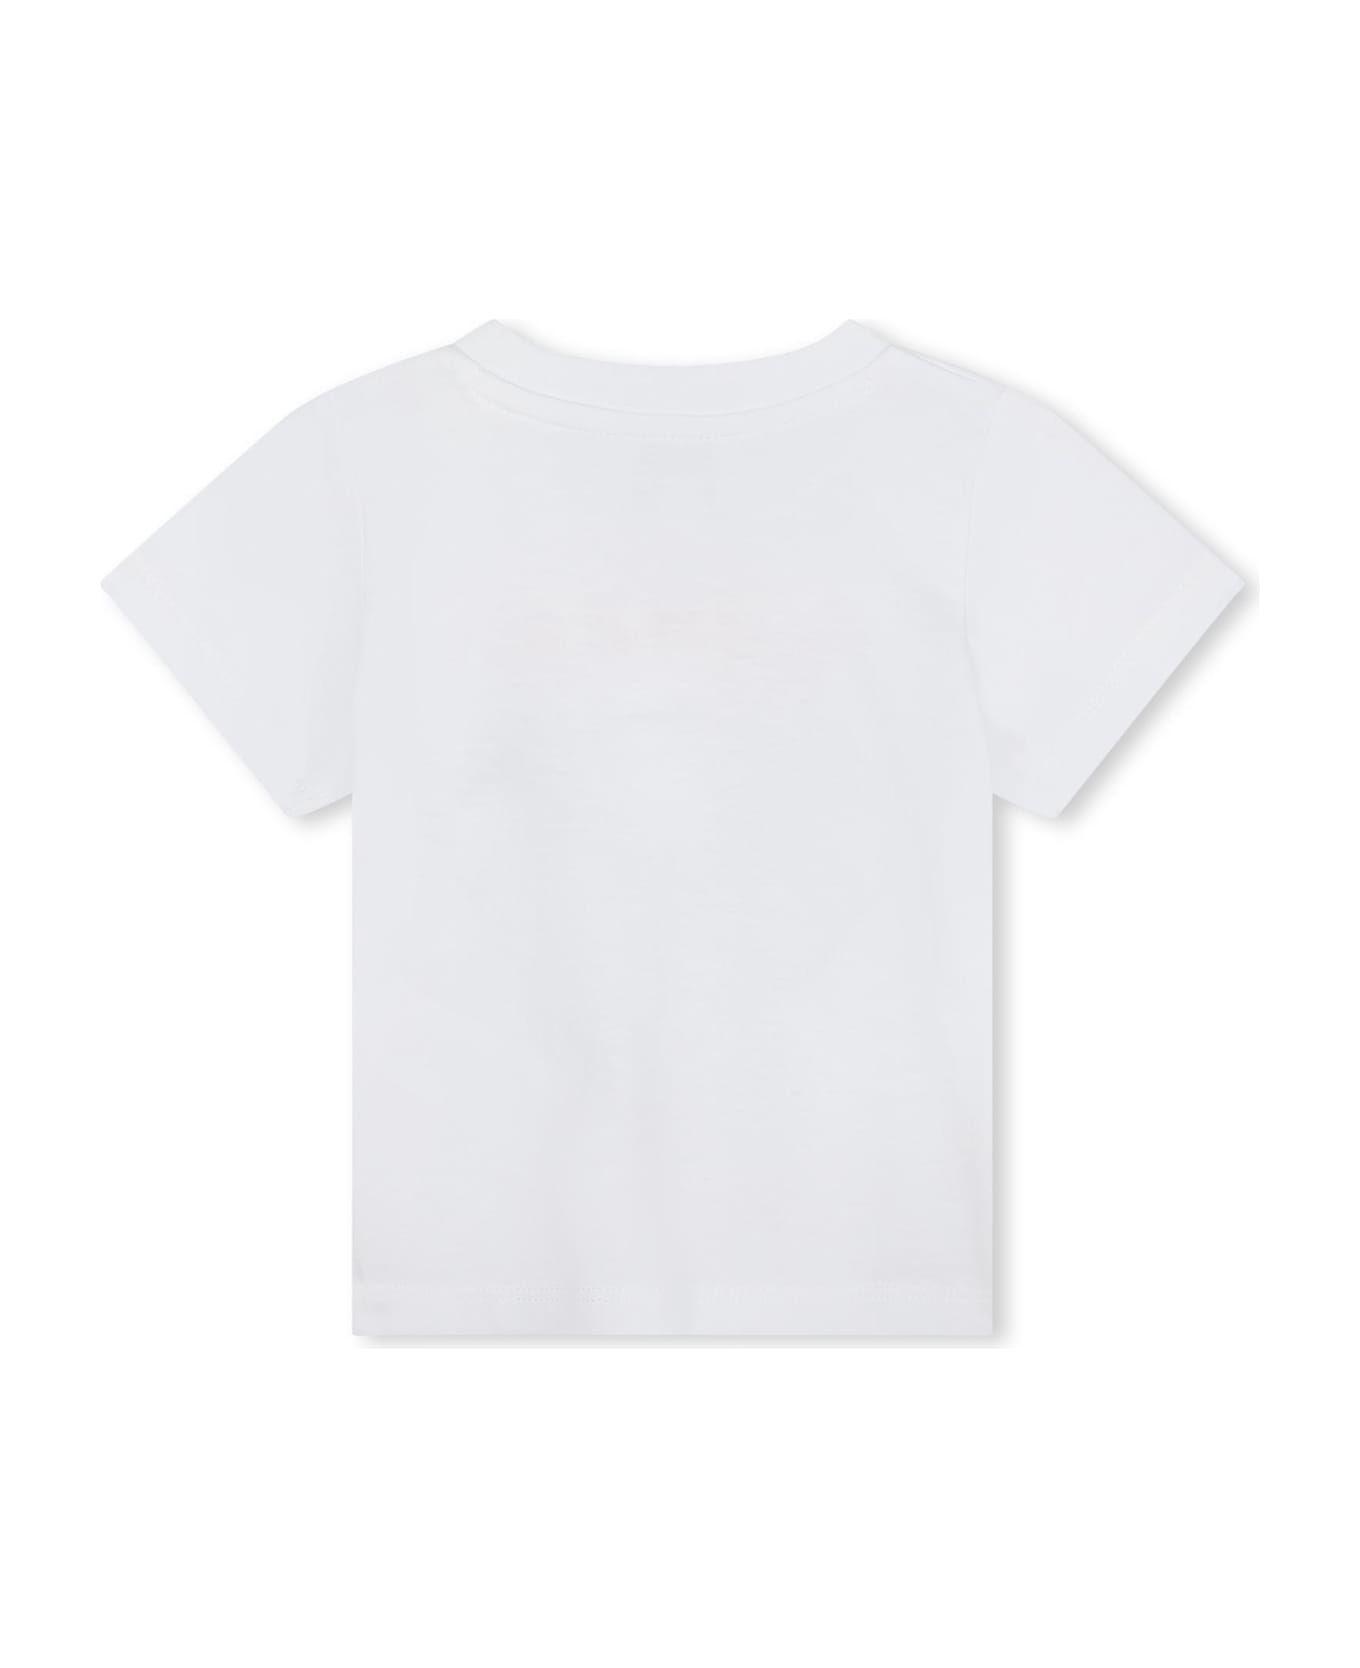 Kenzo Kids T-shirt Con Stampa - White